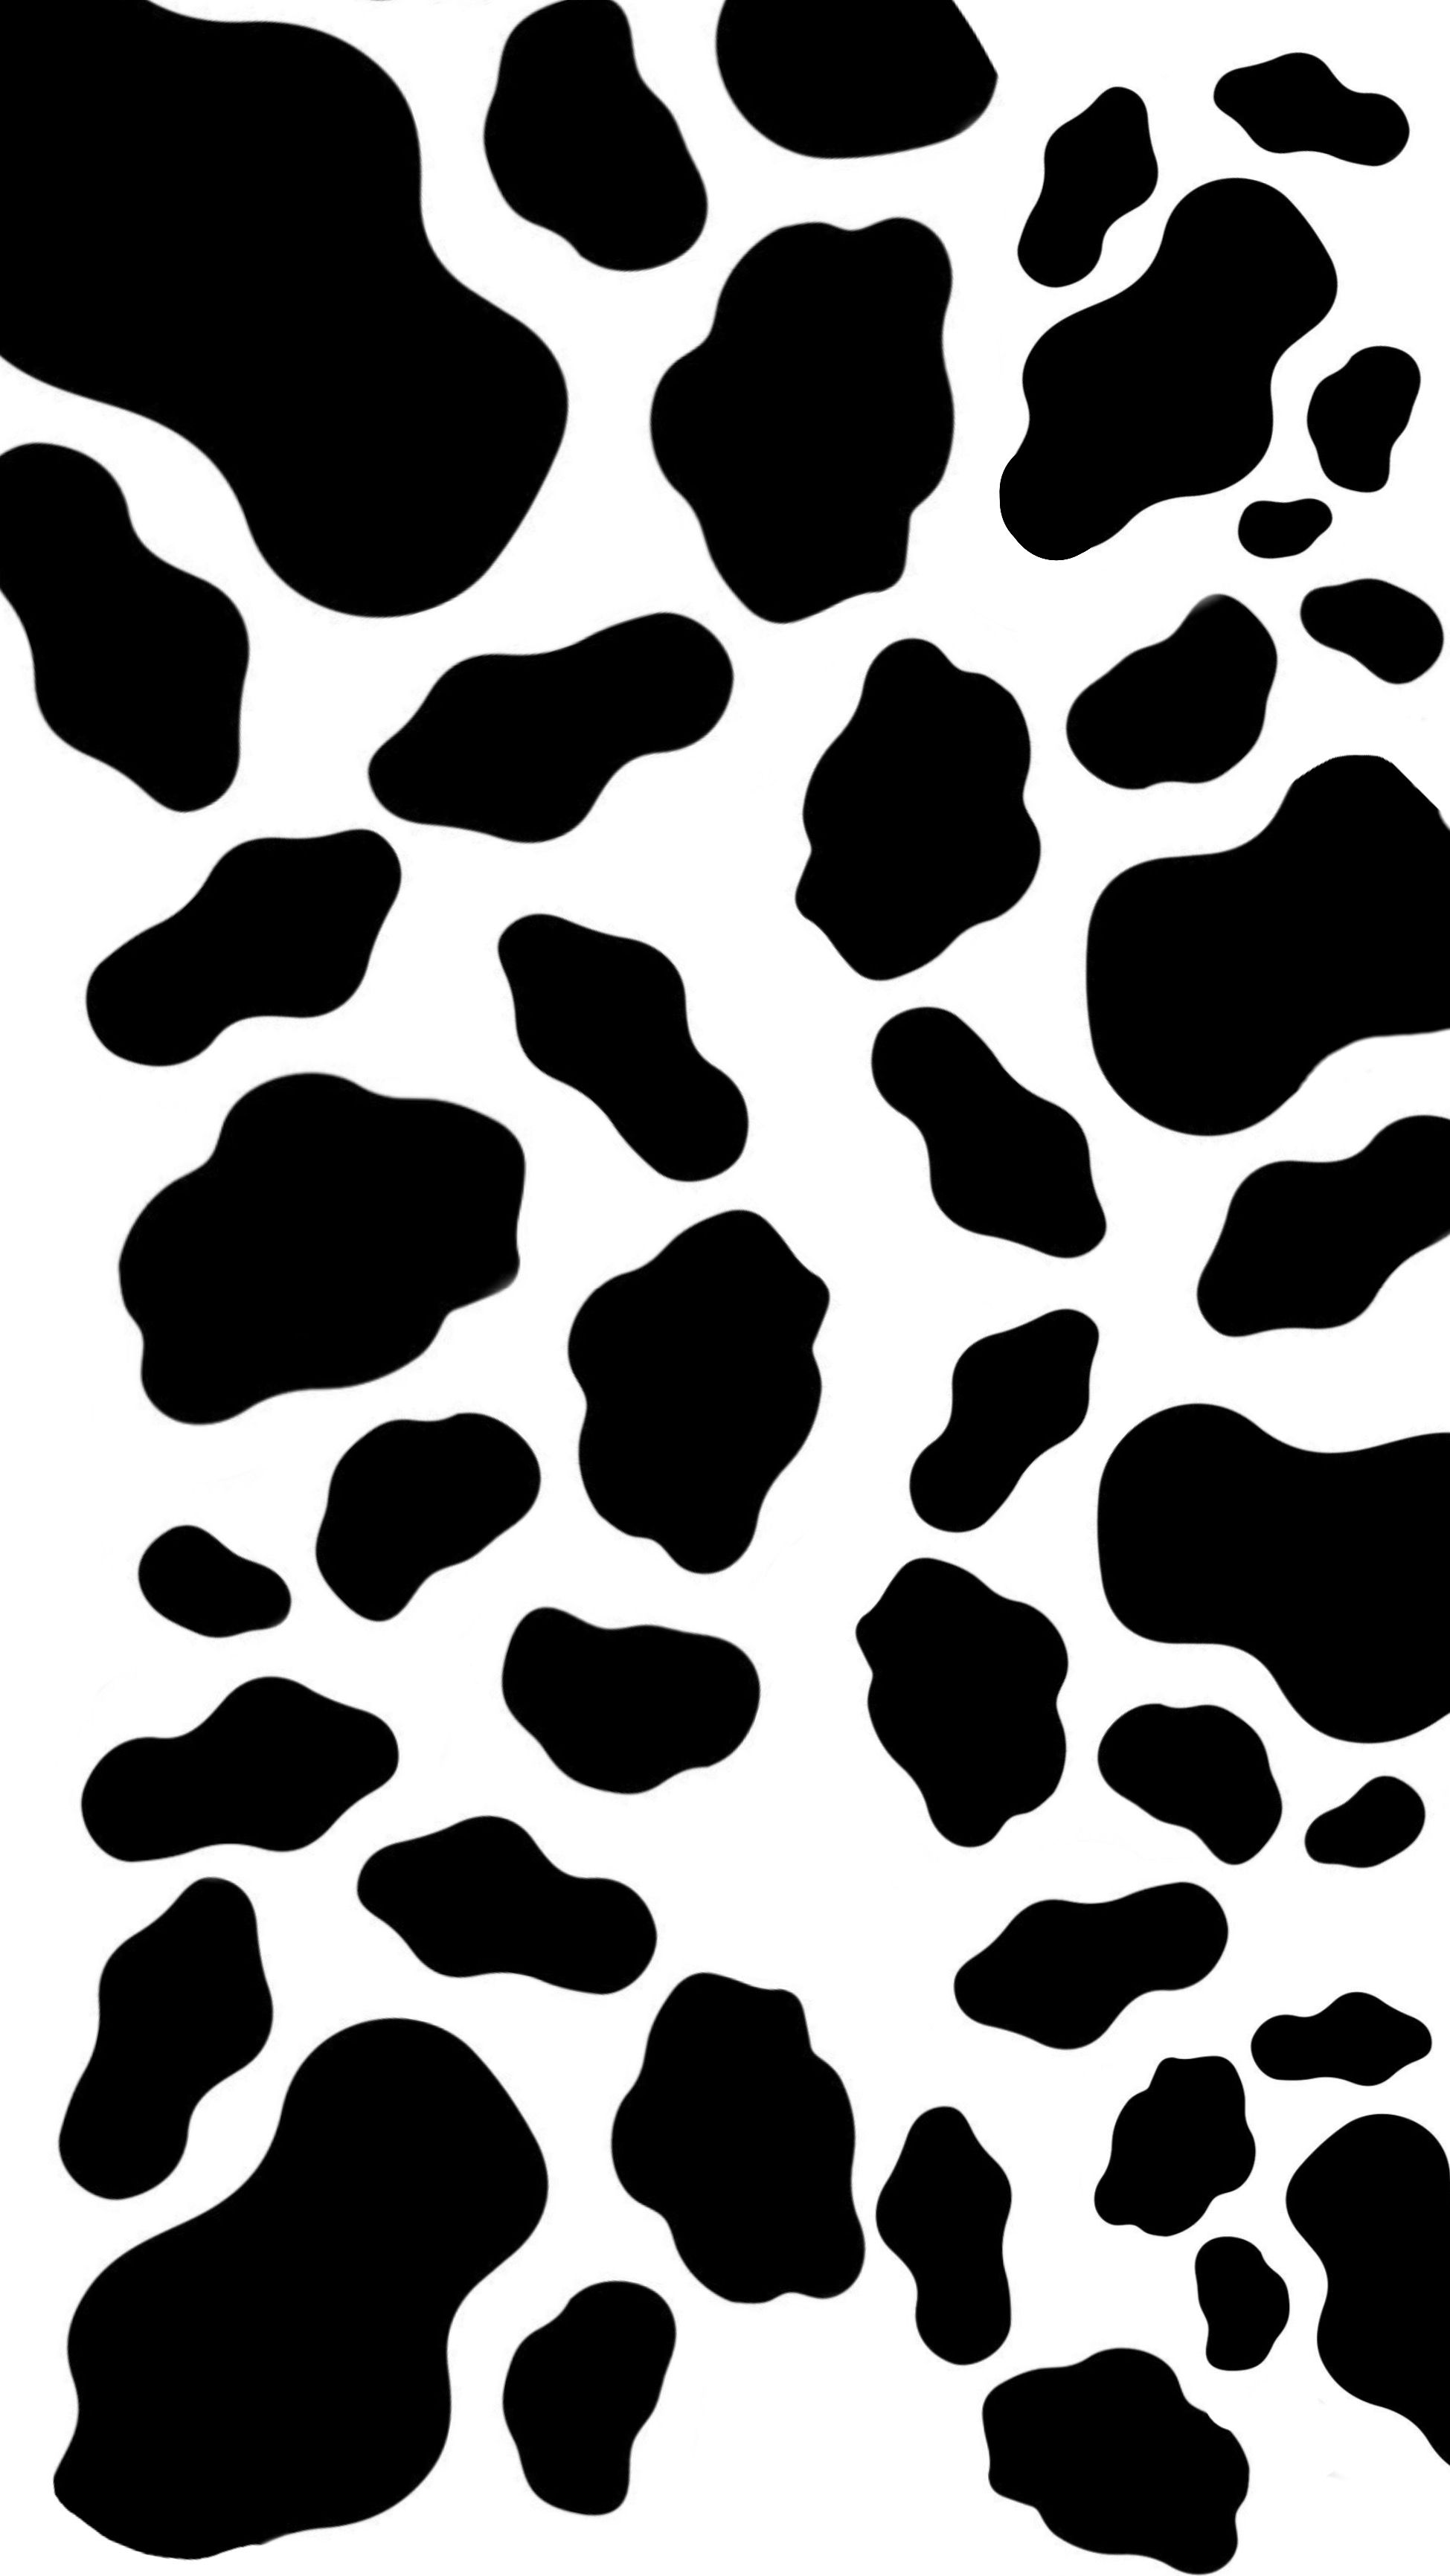 Cow print. Cow print wallpaper, Cow wallpaper, Cheetah print wallpaper